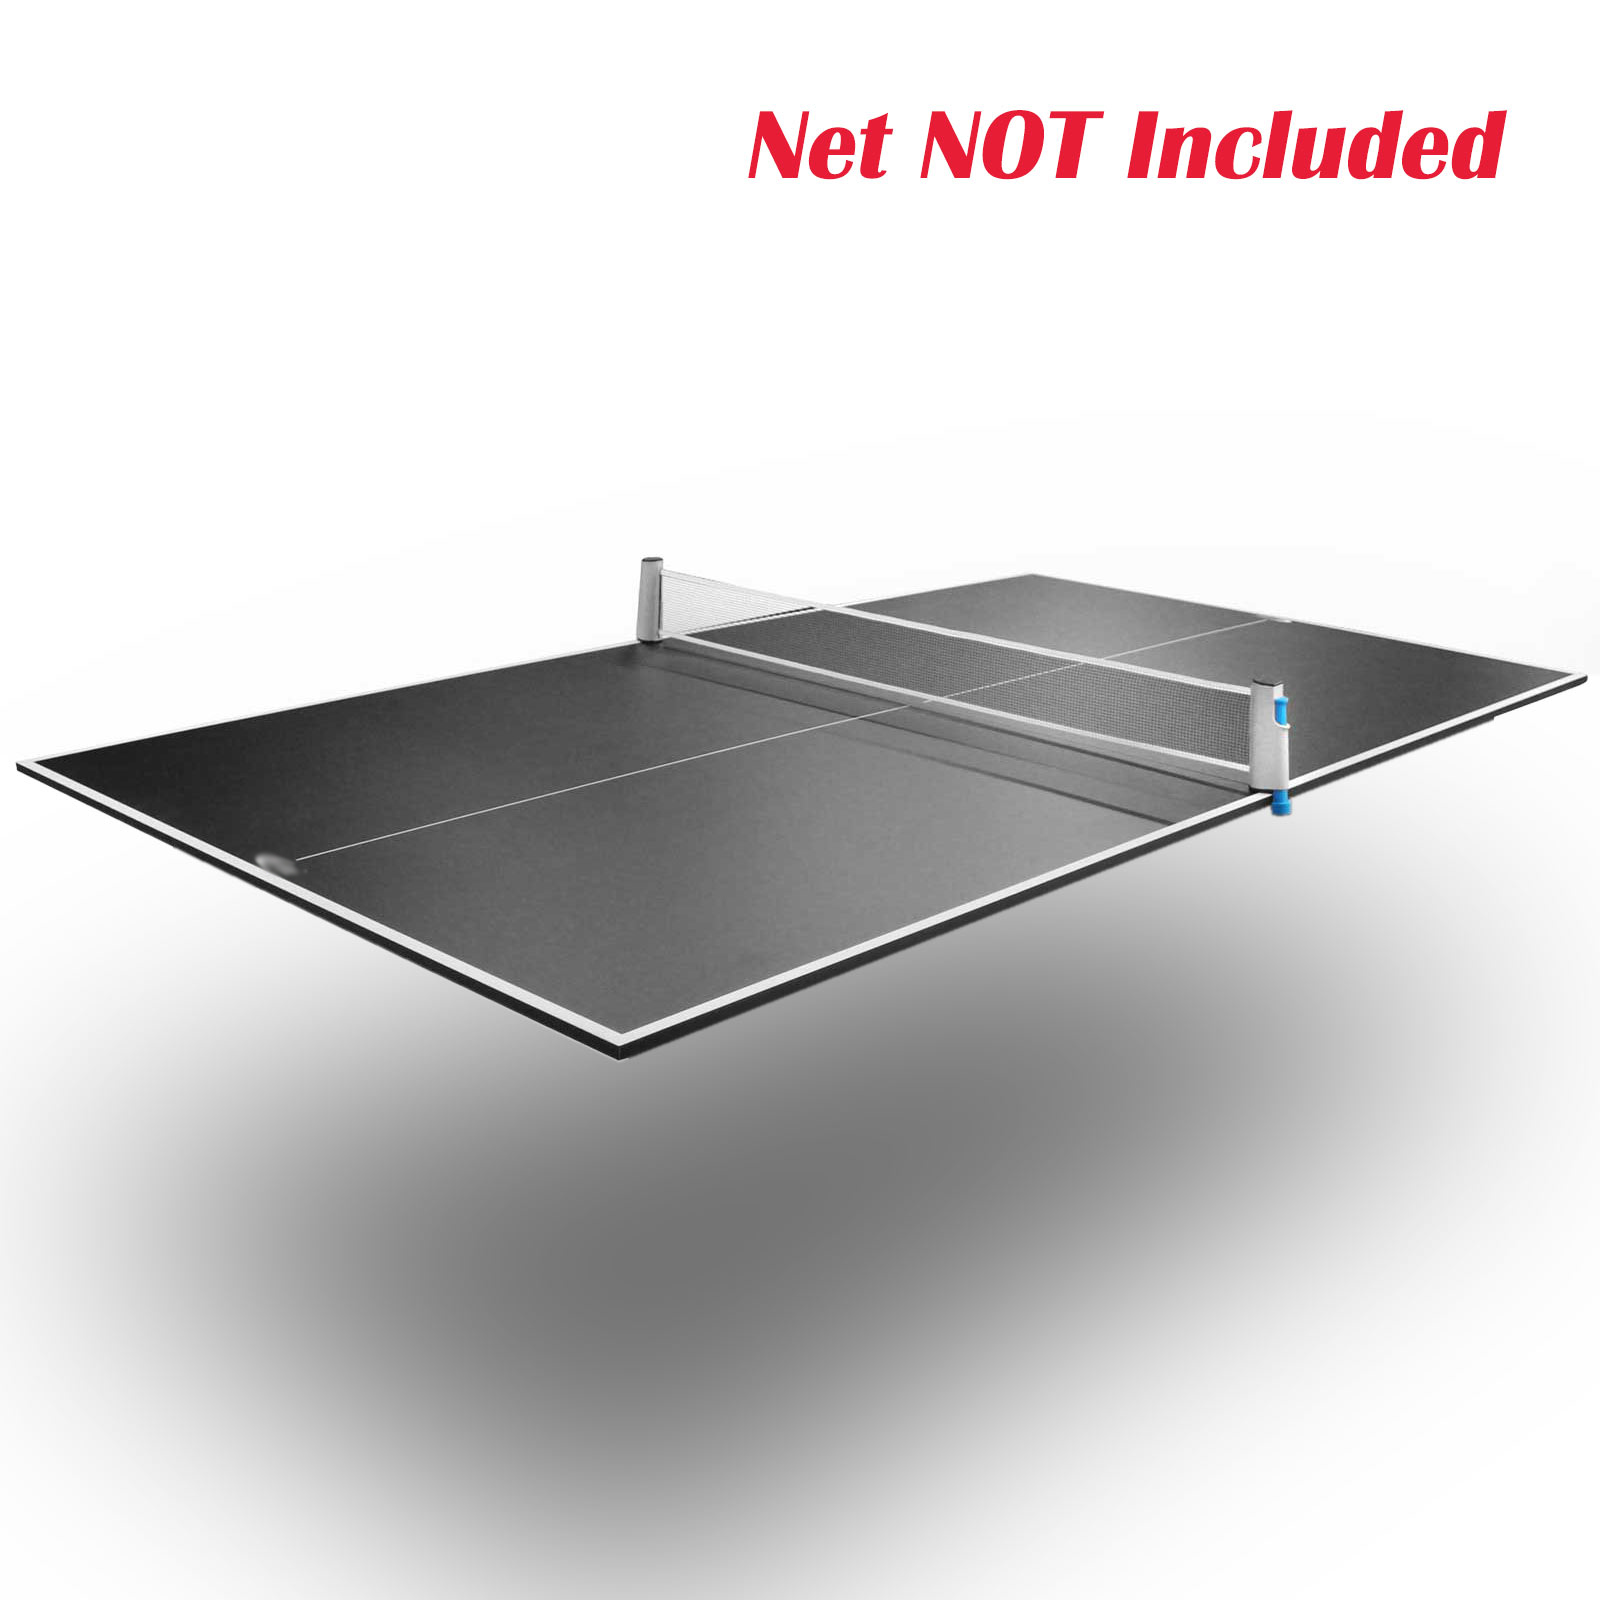 cheap ping pong table top